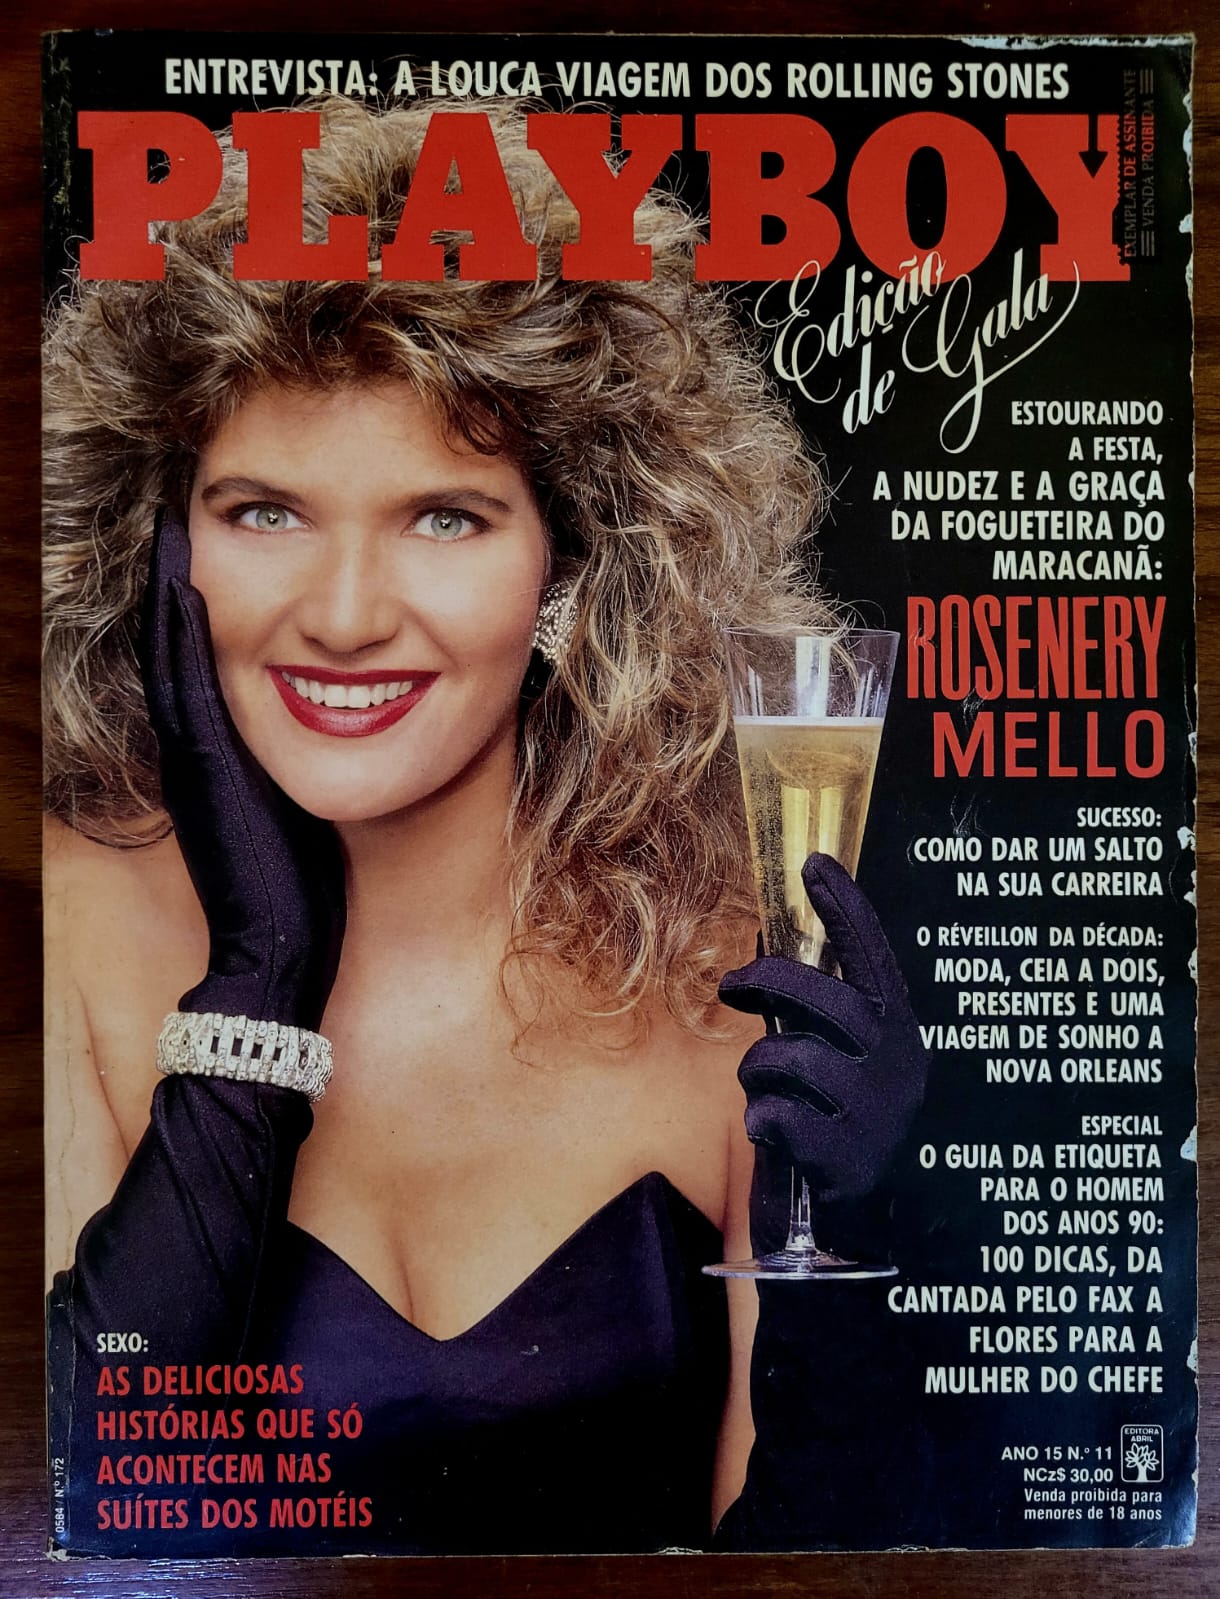 Playboy No 172 Rosenery Mello 1 Casa do Colecionador